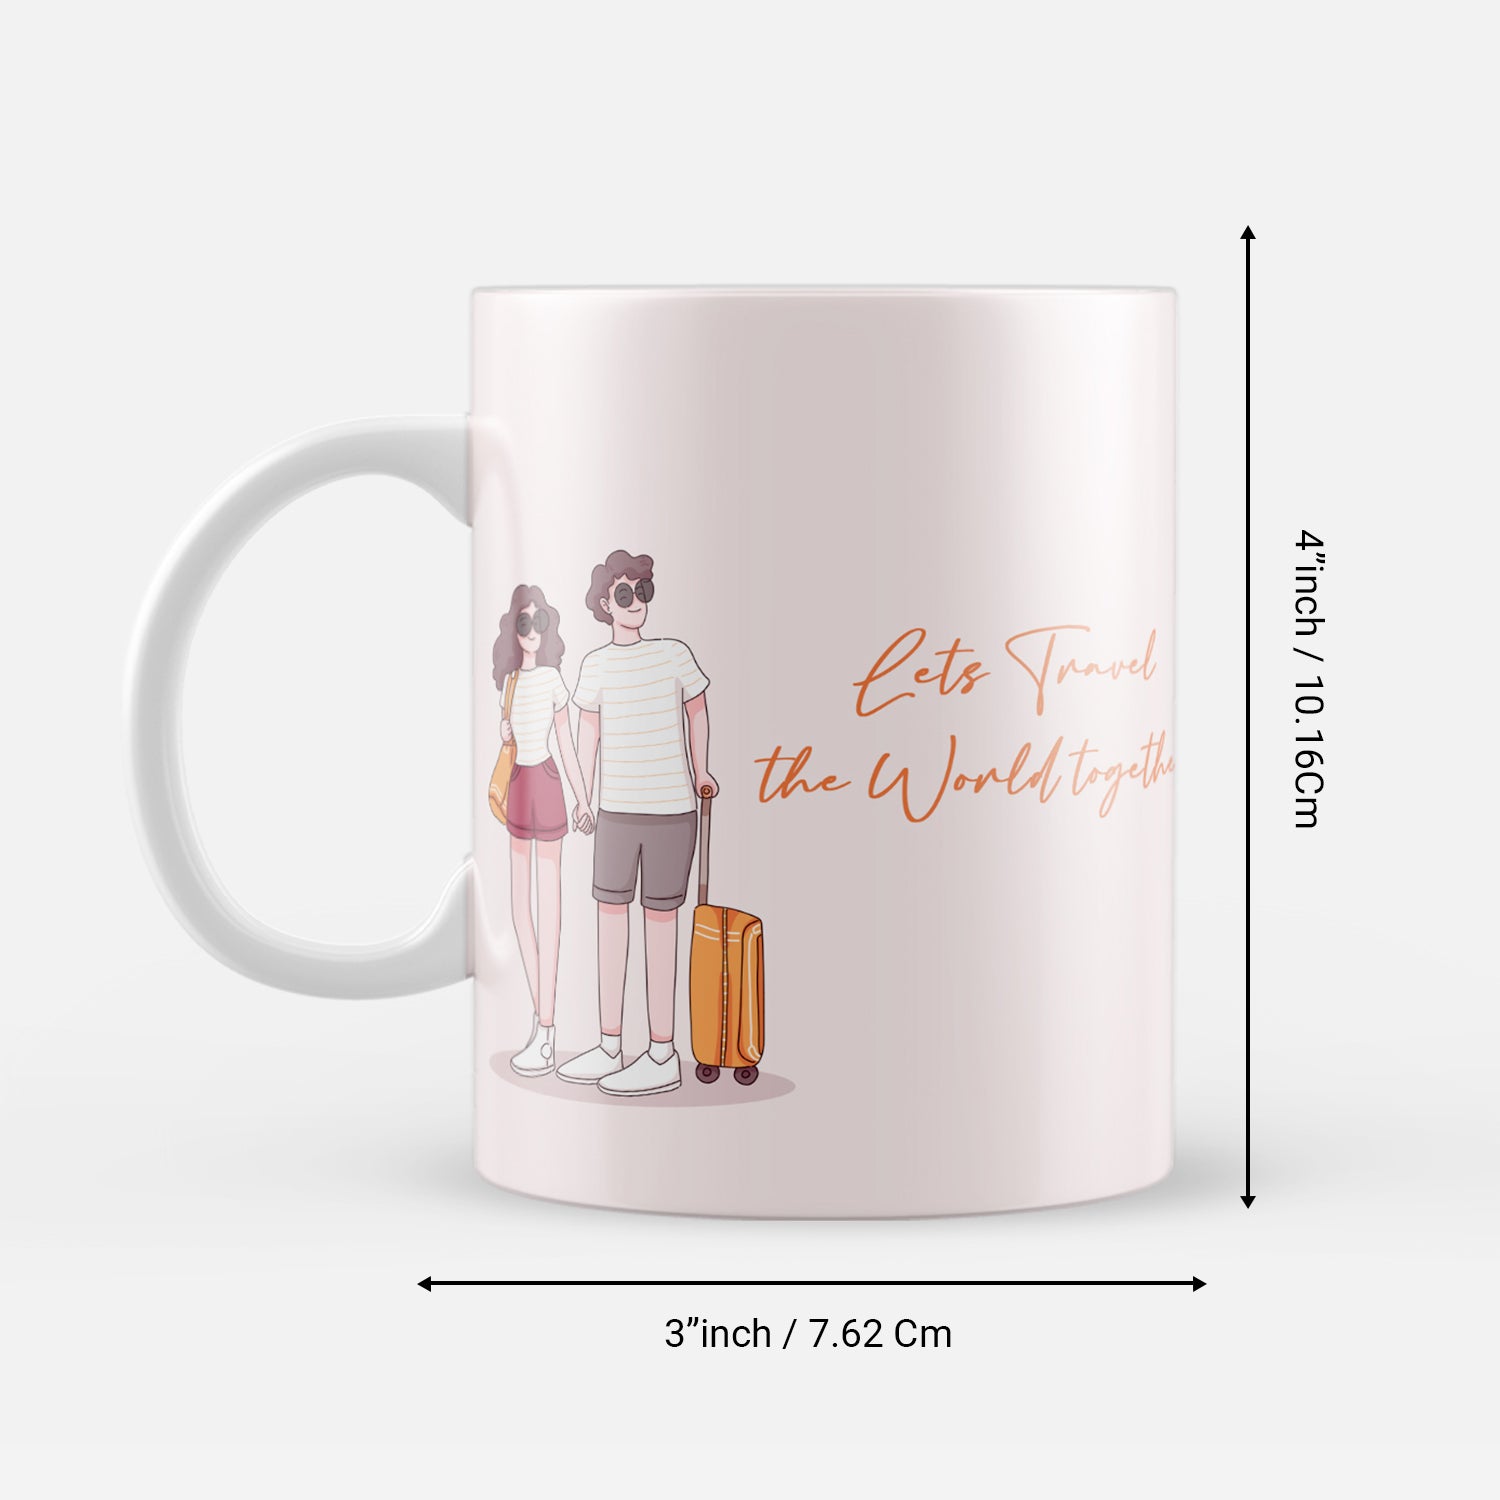 Let Travel the world together Valentine Love theme Ceramic Coffee Mug 3